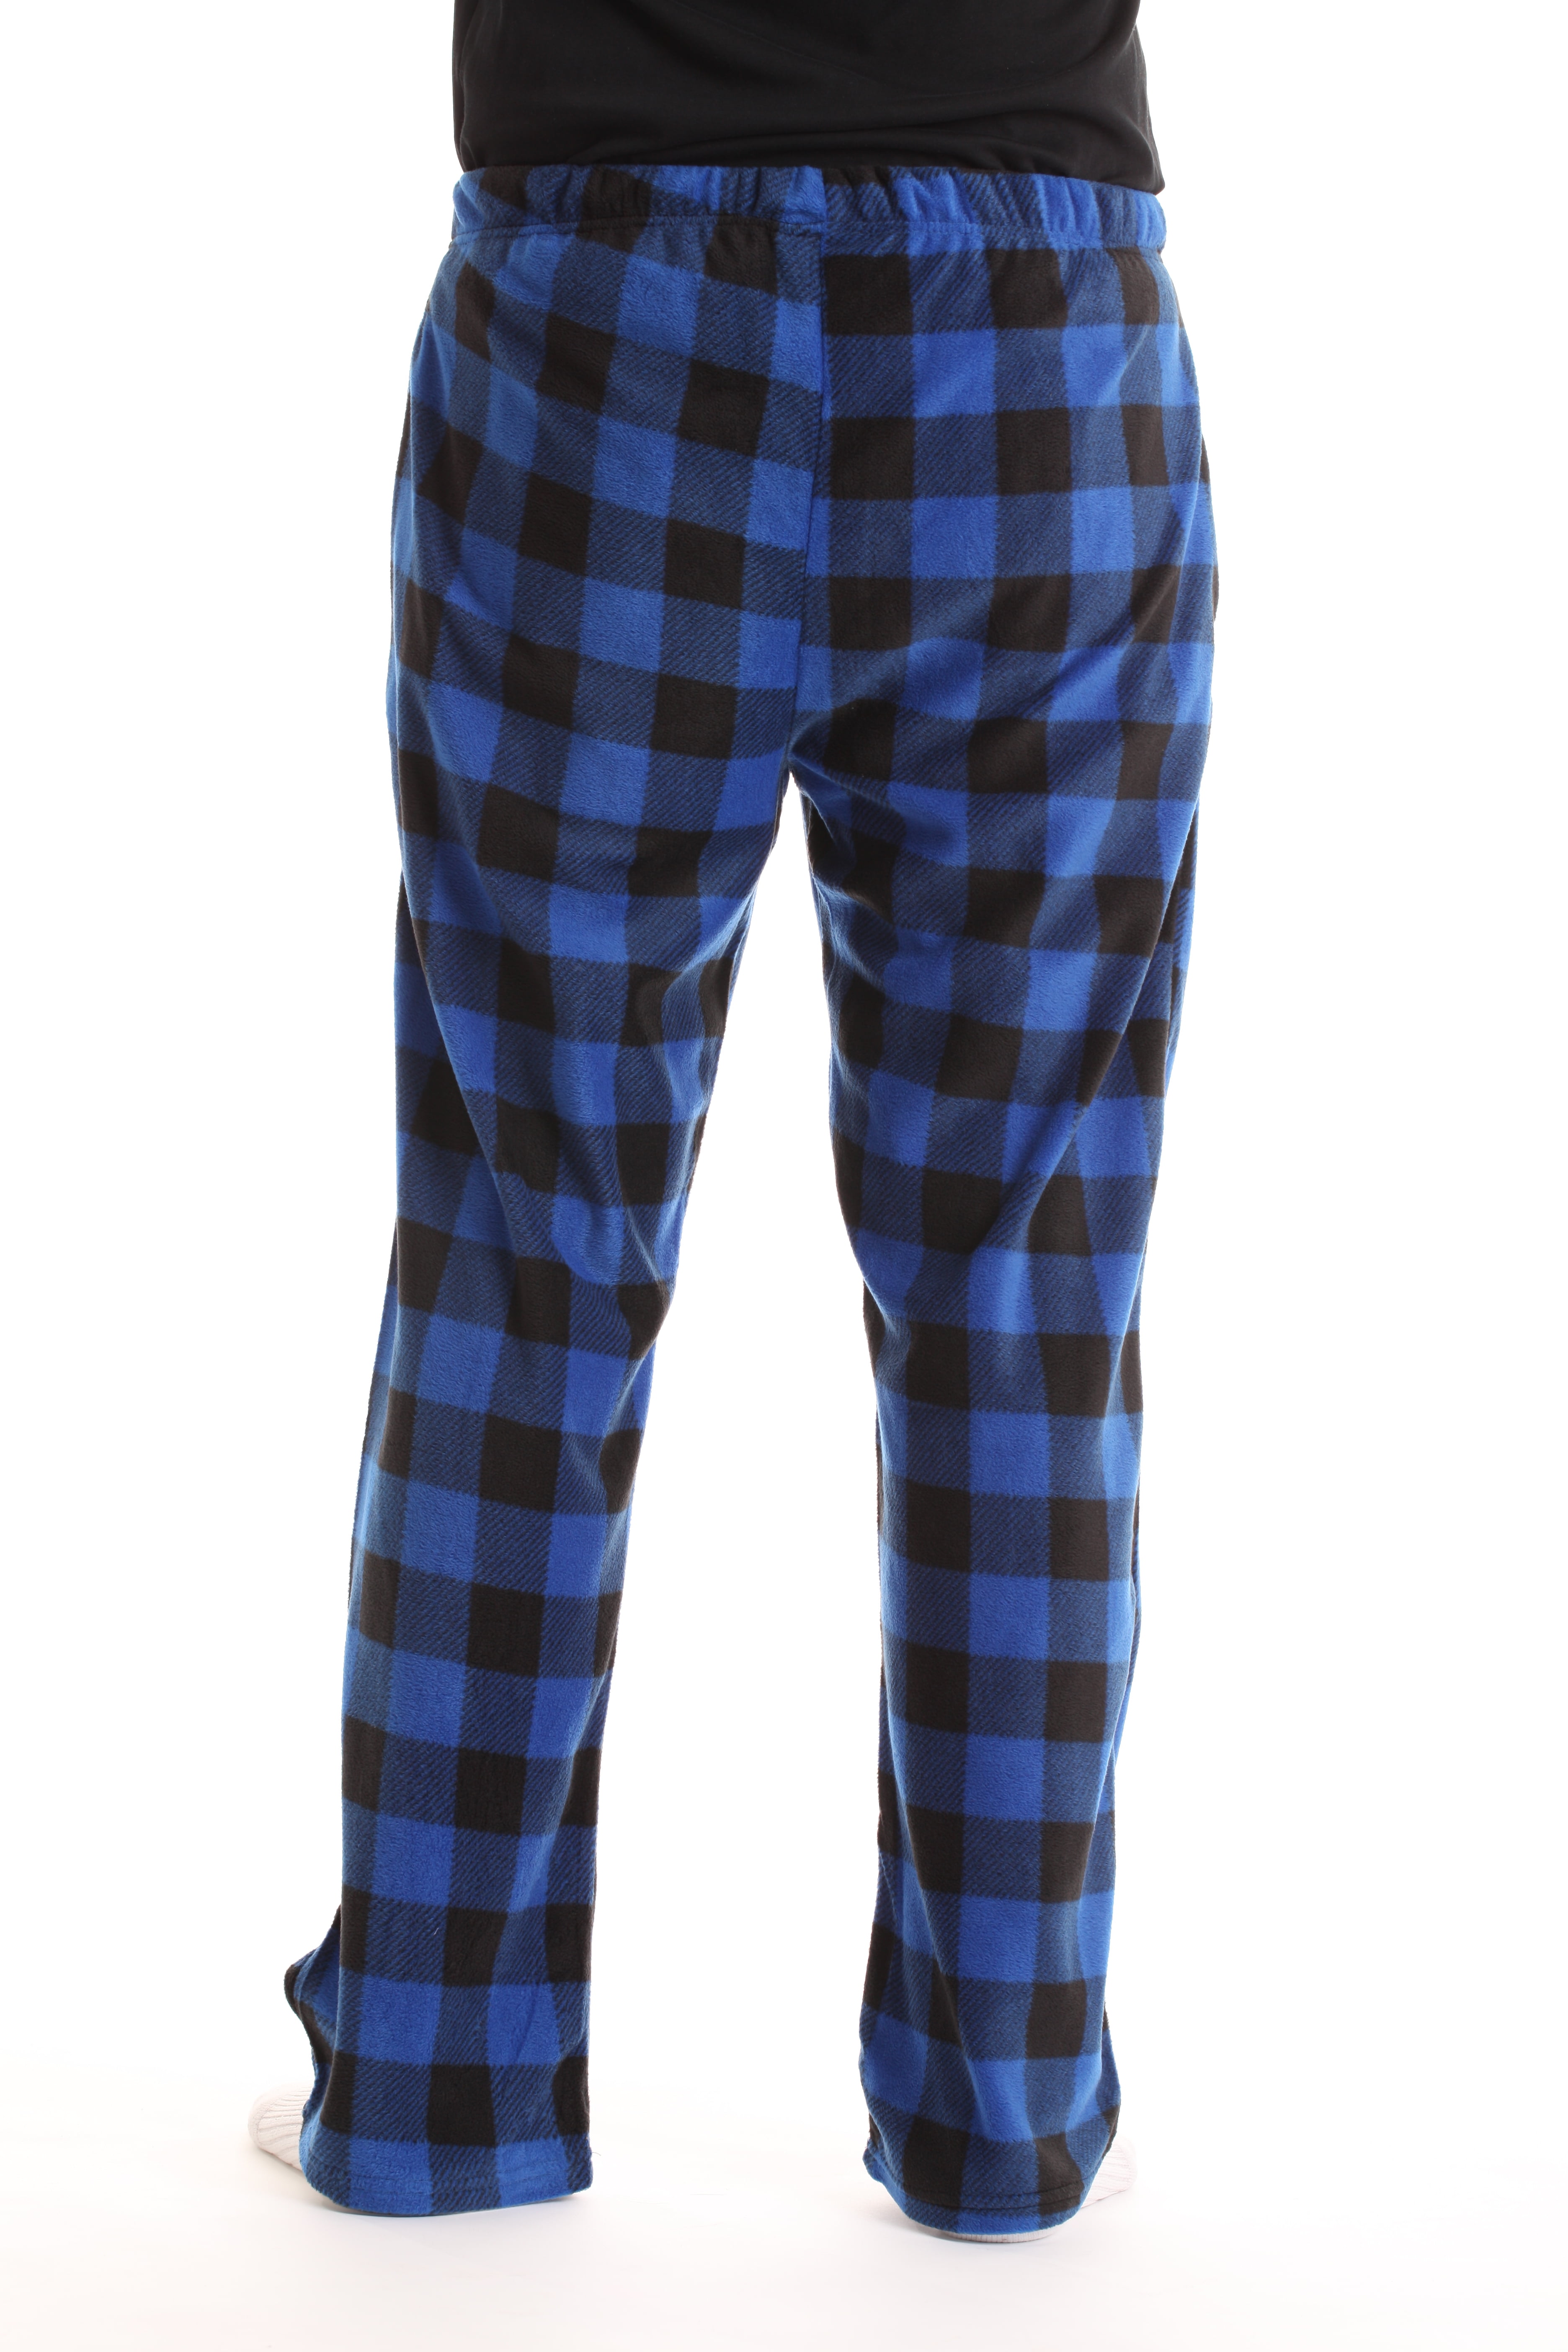 #followme Microfleece Men’s Buffalo Plaid Pajama Pants with Pockets (Blue  Buffalo Plaid, Large)